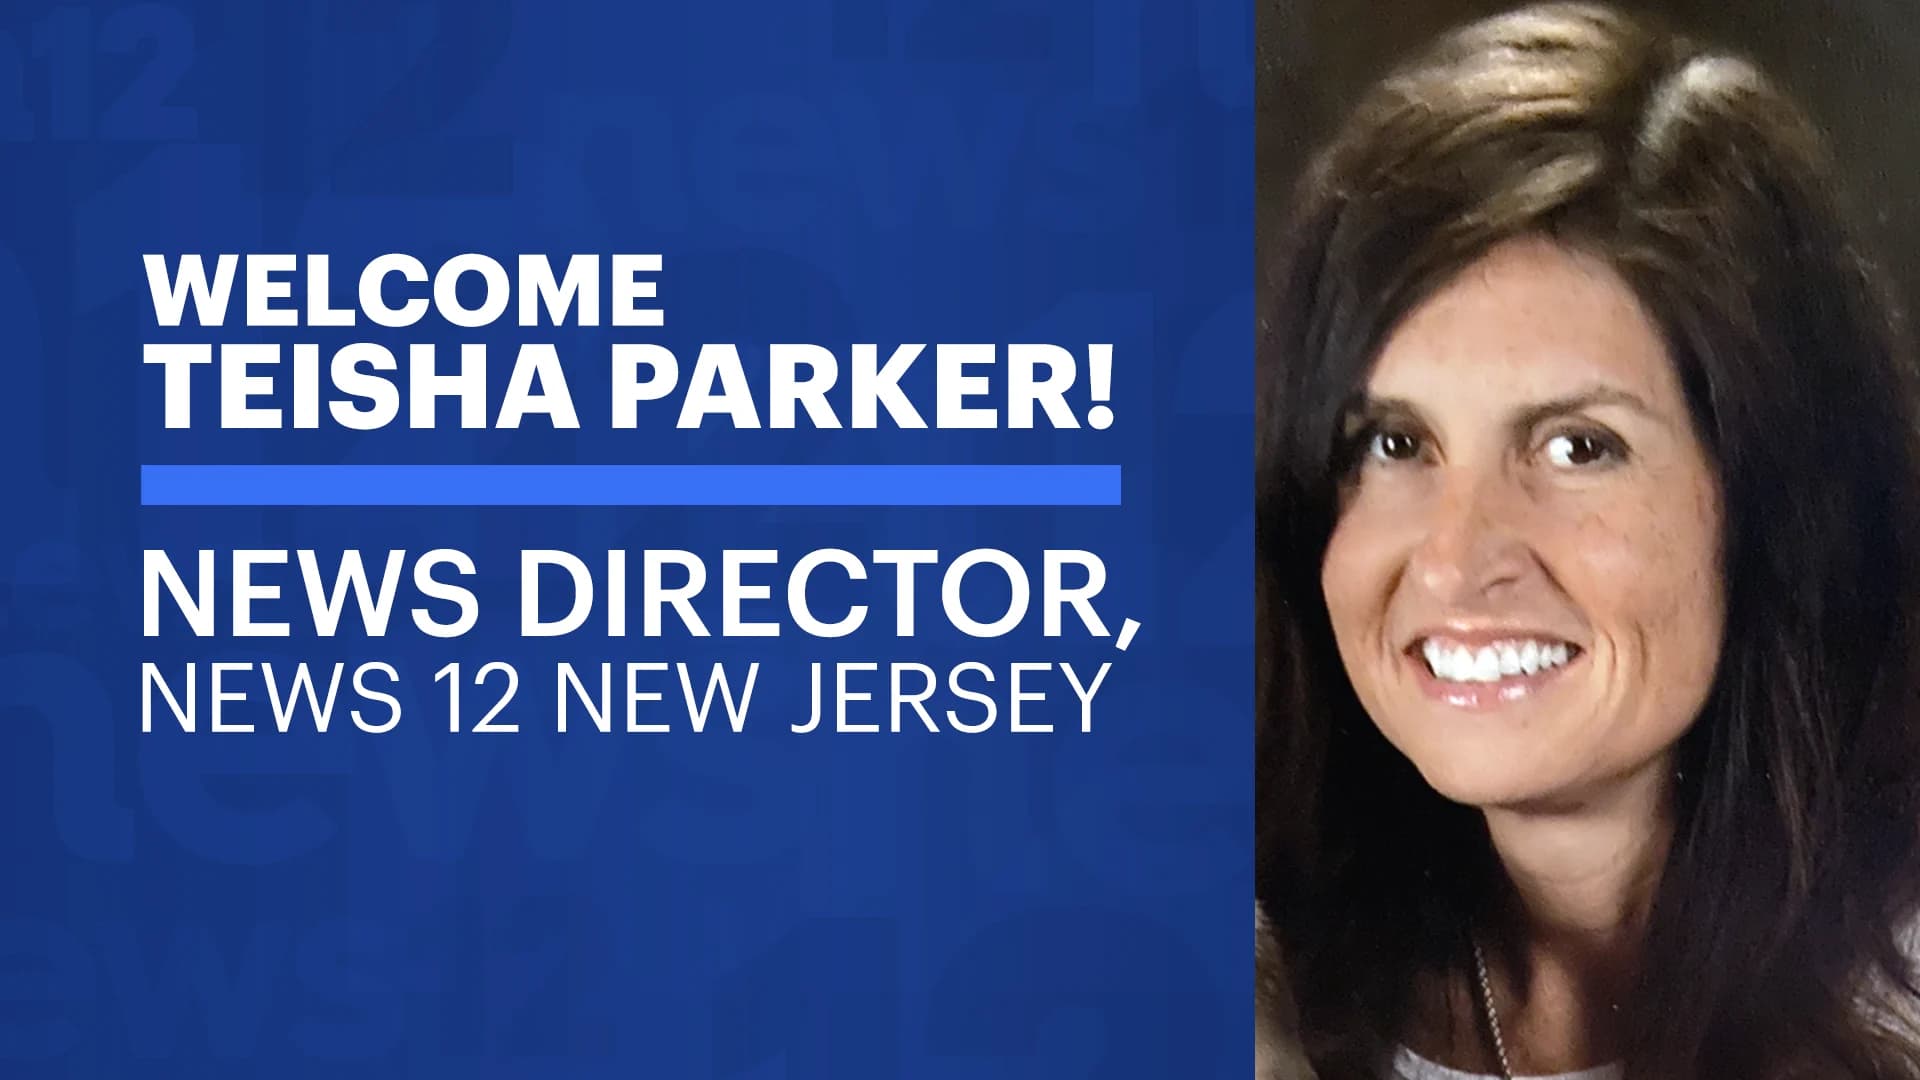 Teisha Parker Named News Director of News 12 New Jersey 